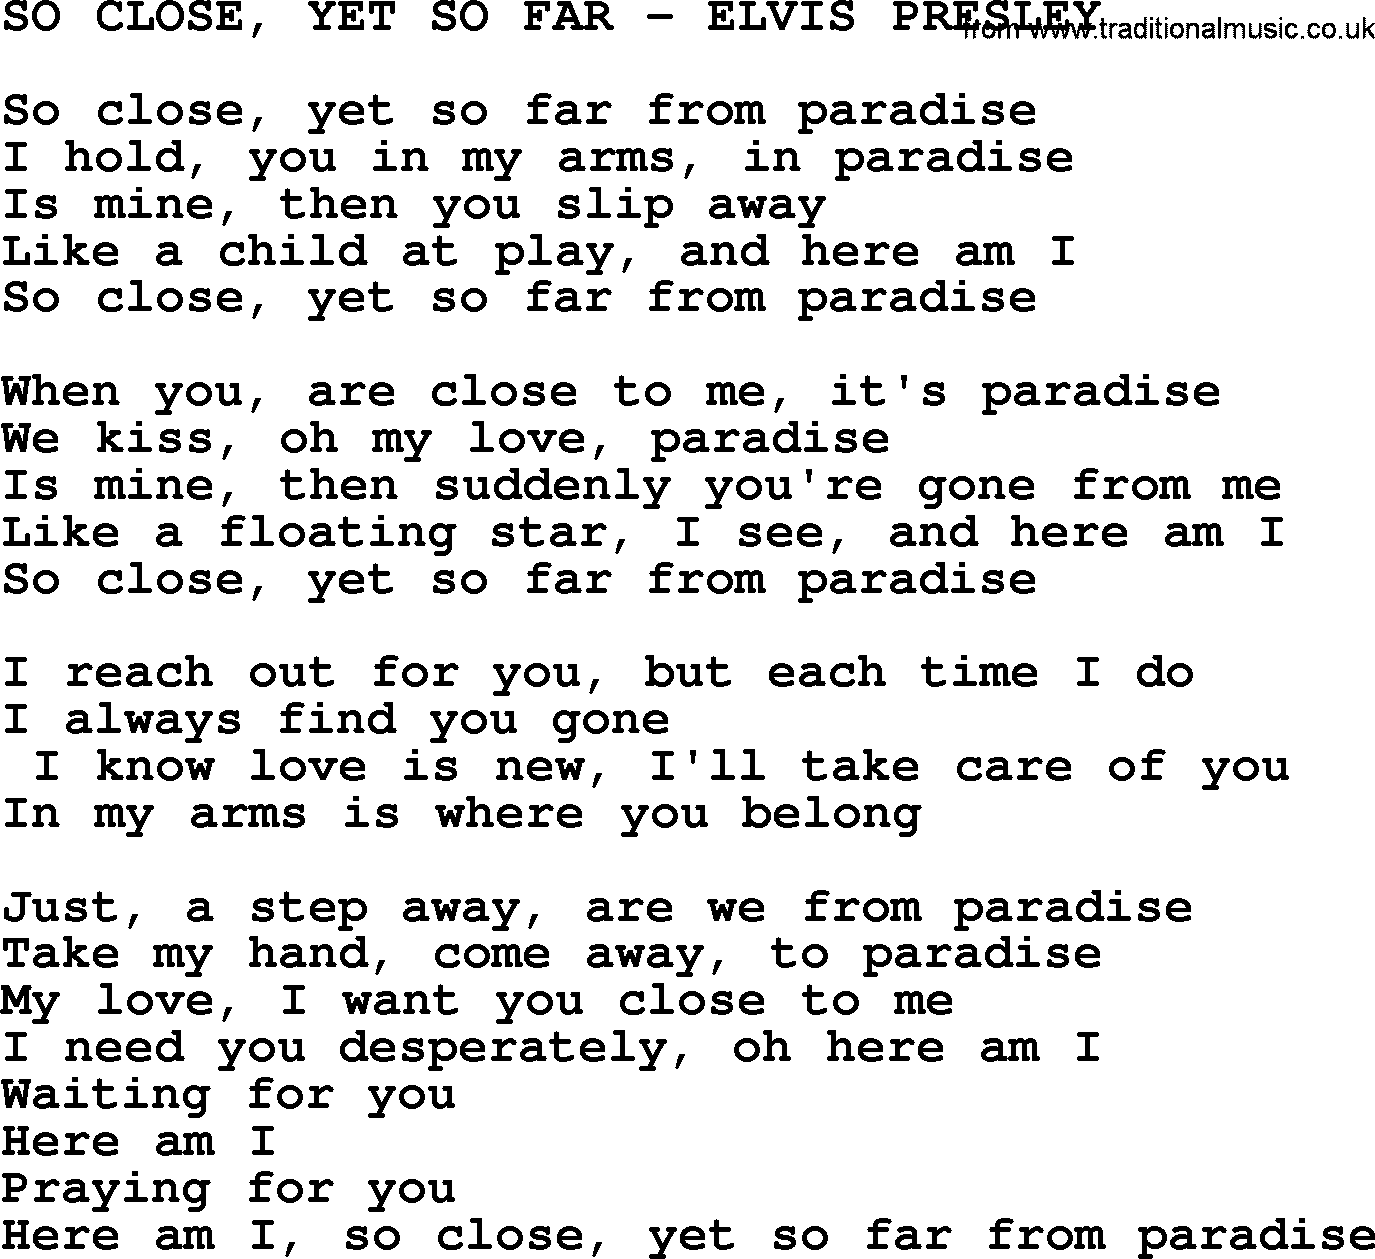 Elvis Presley song: So Close, Yet So Far-Elvis Presley-.txt lyrics and chords